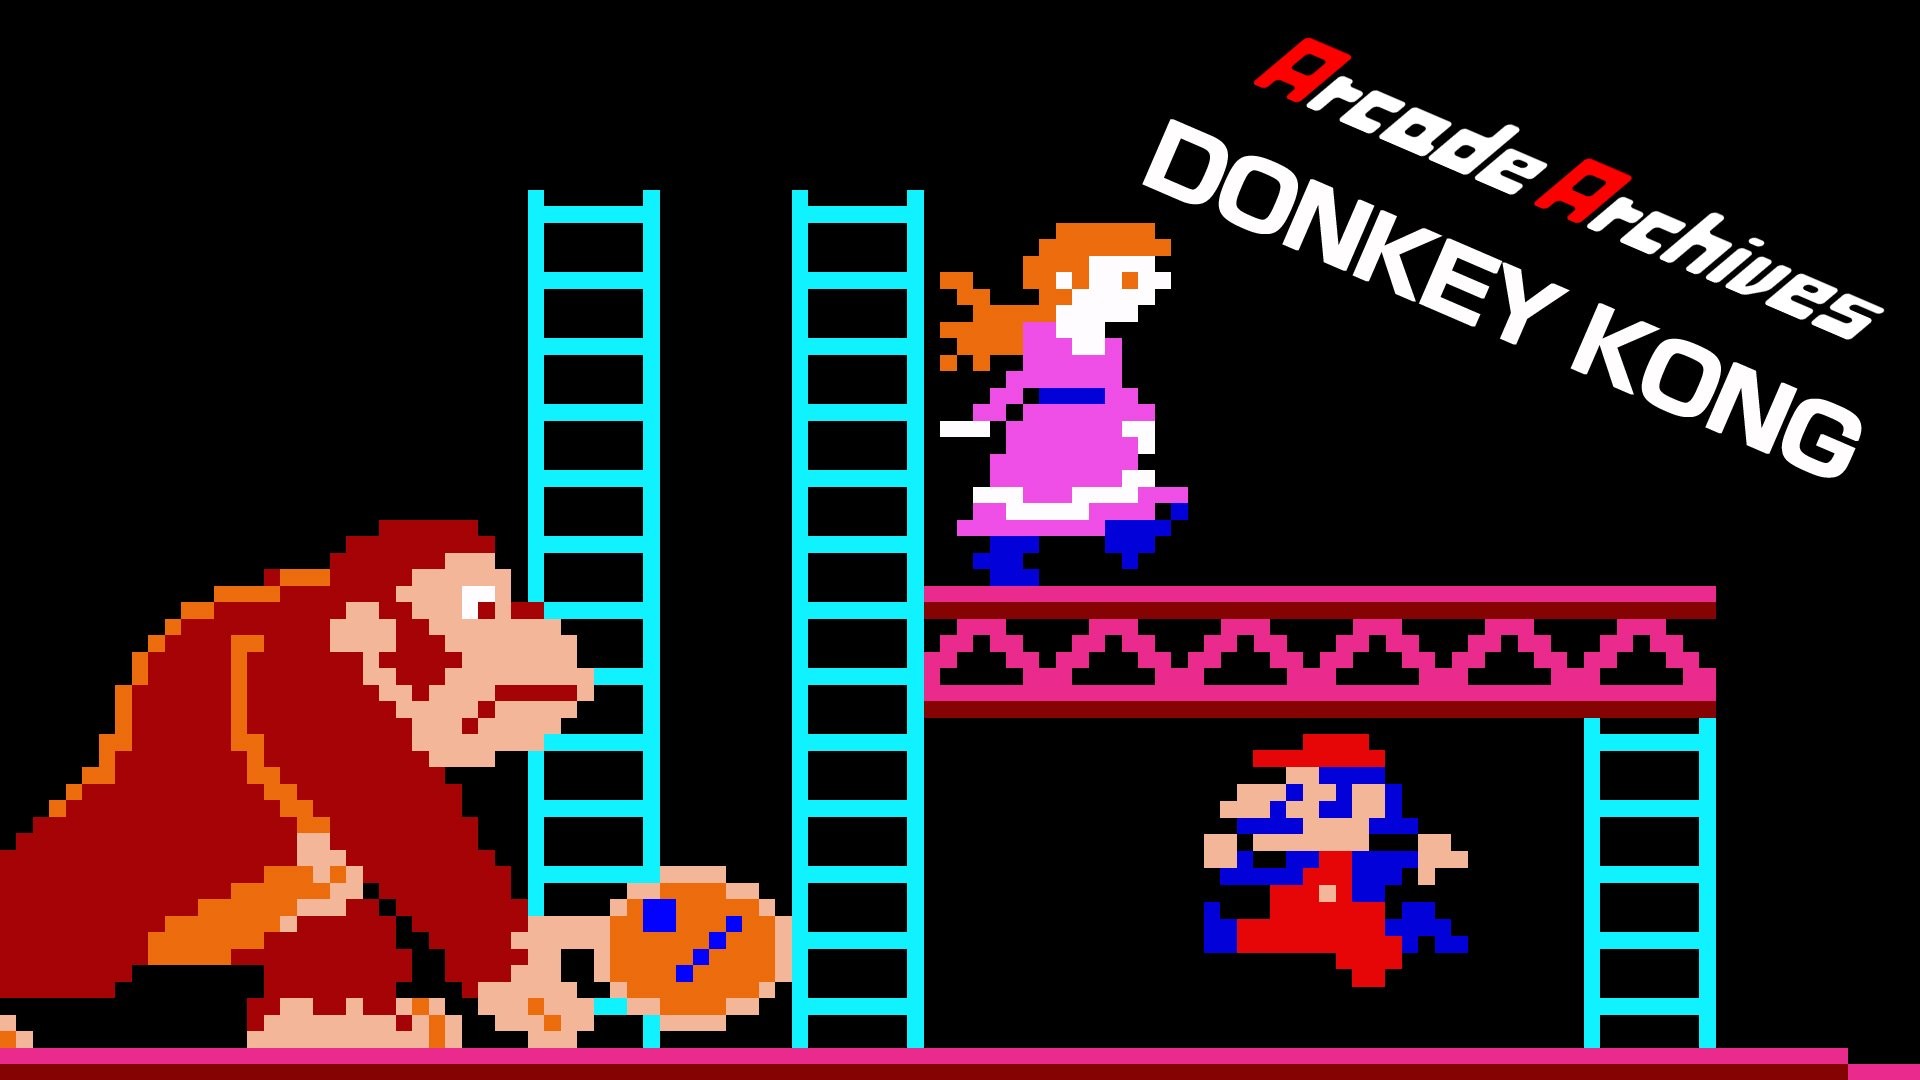 1920x1080 Donkey Kong Classic Arcade